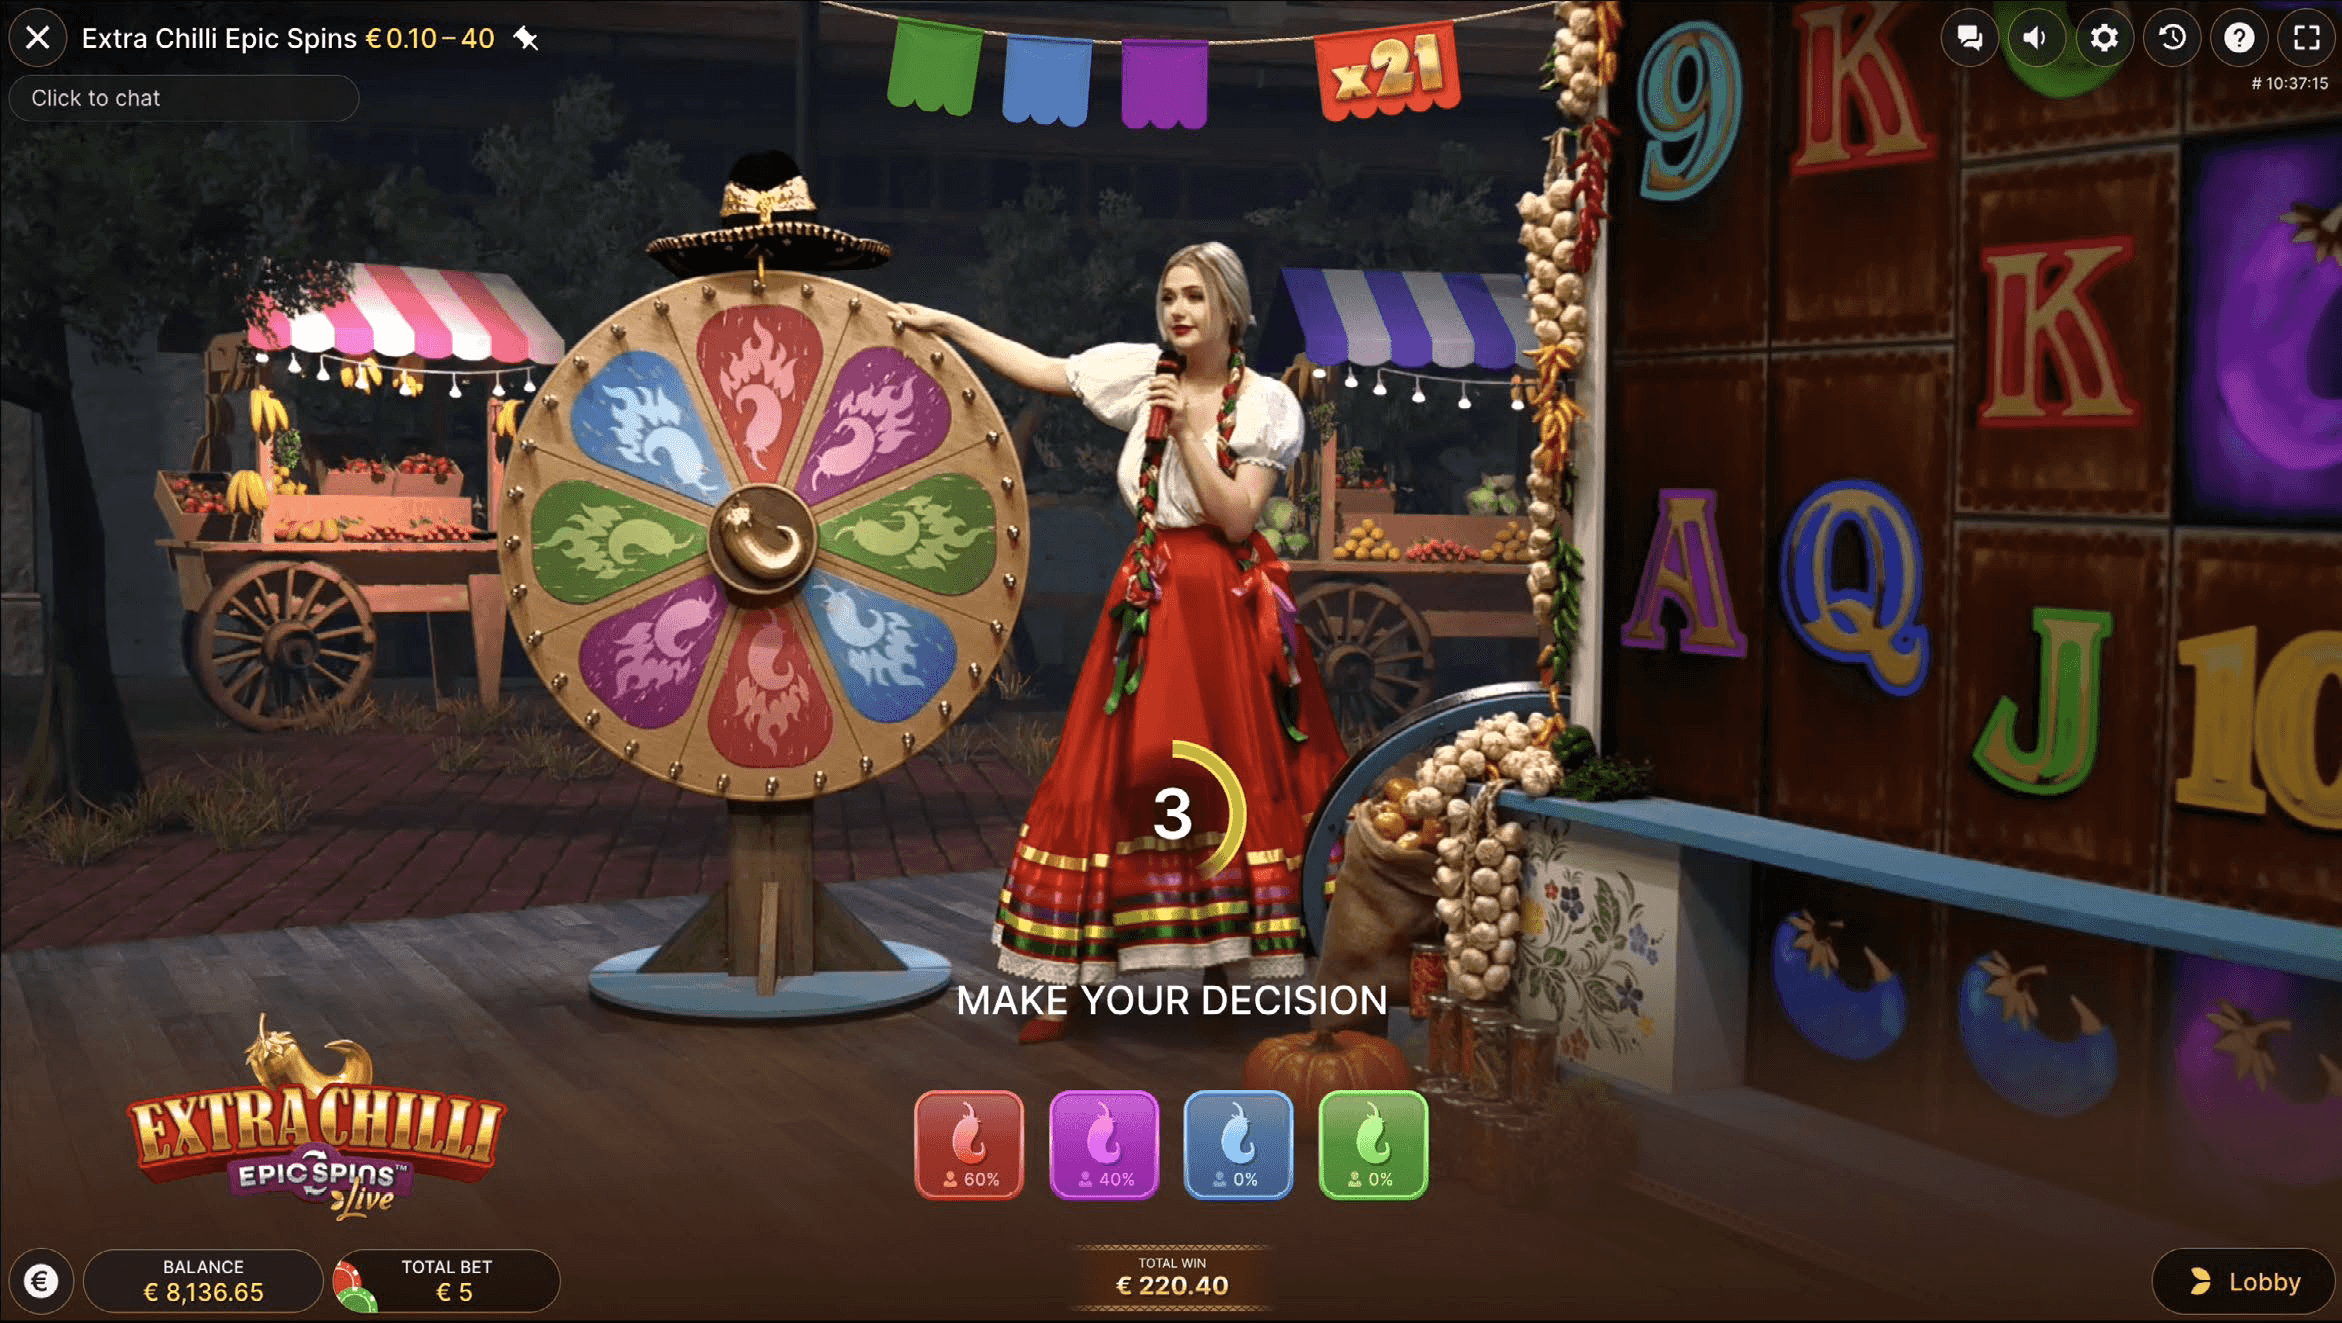 Gamble wheel free spins bonusspel Extra Chilli Epic Spins